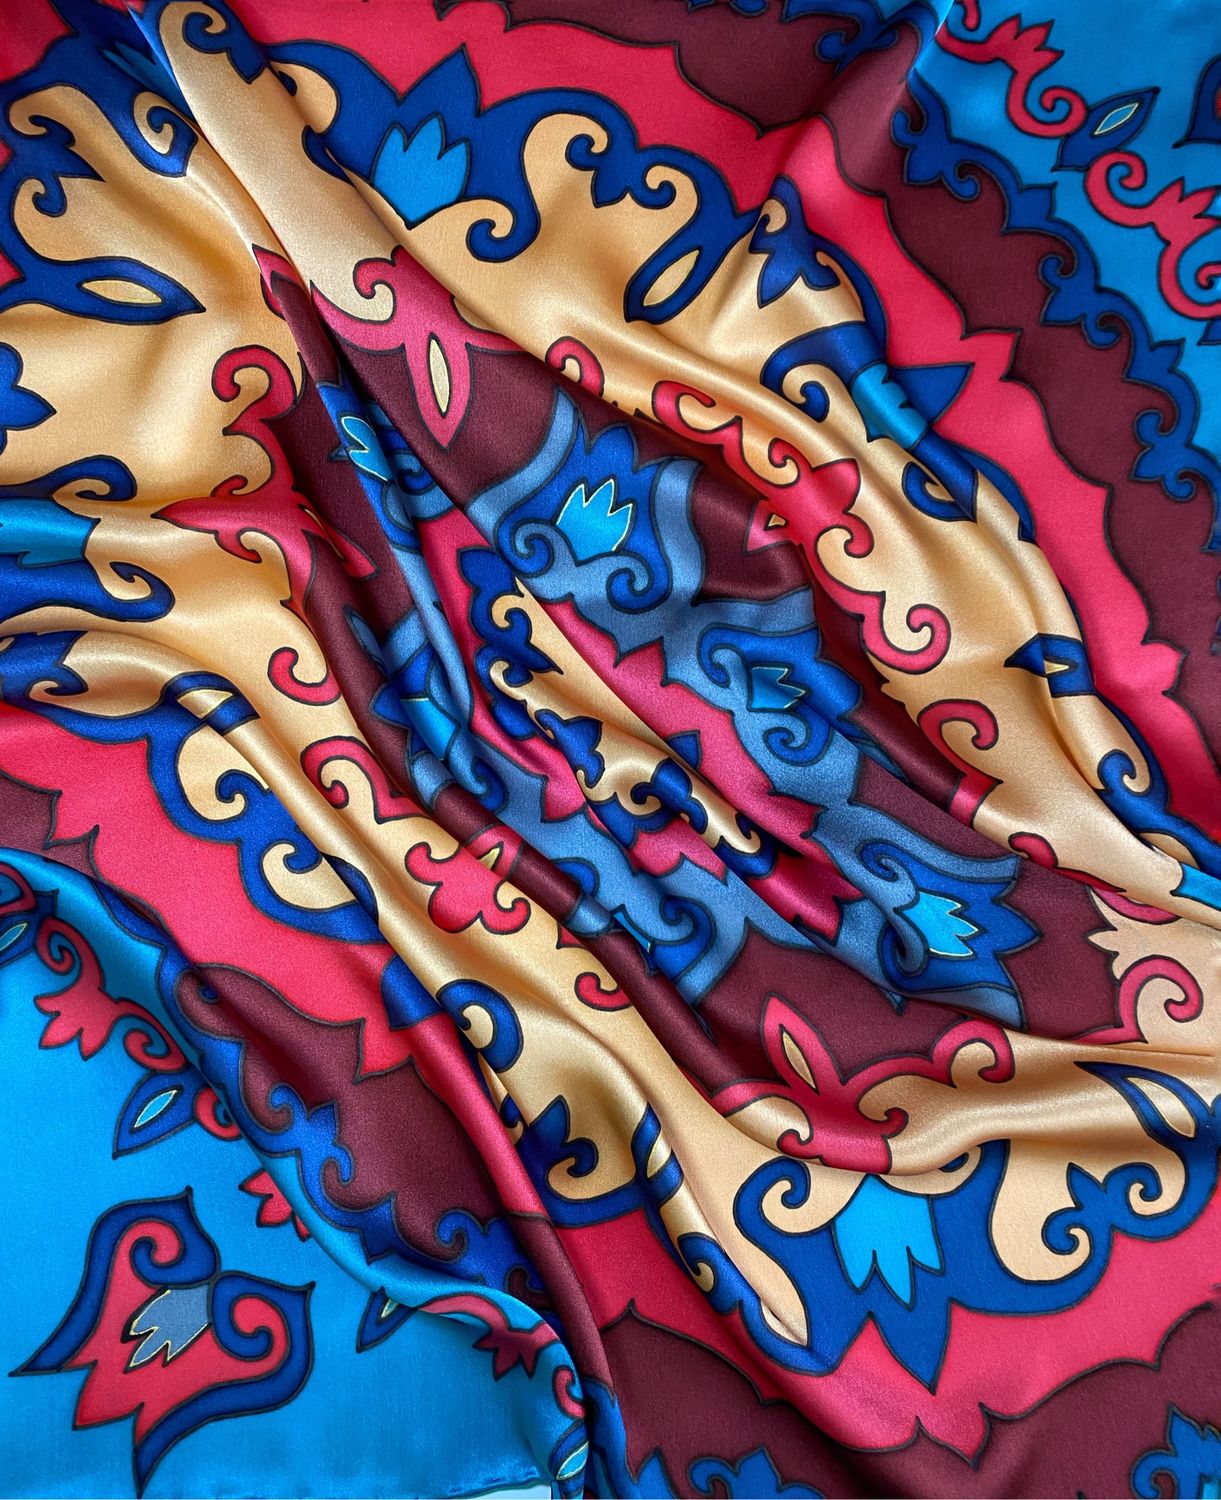 Батик: техника росписи на ткани